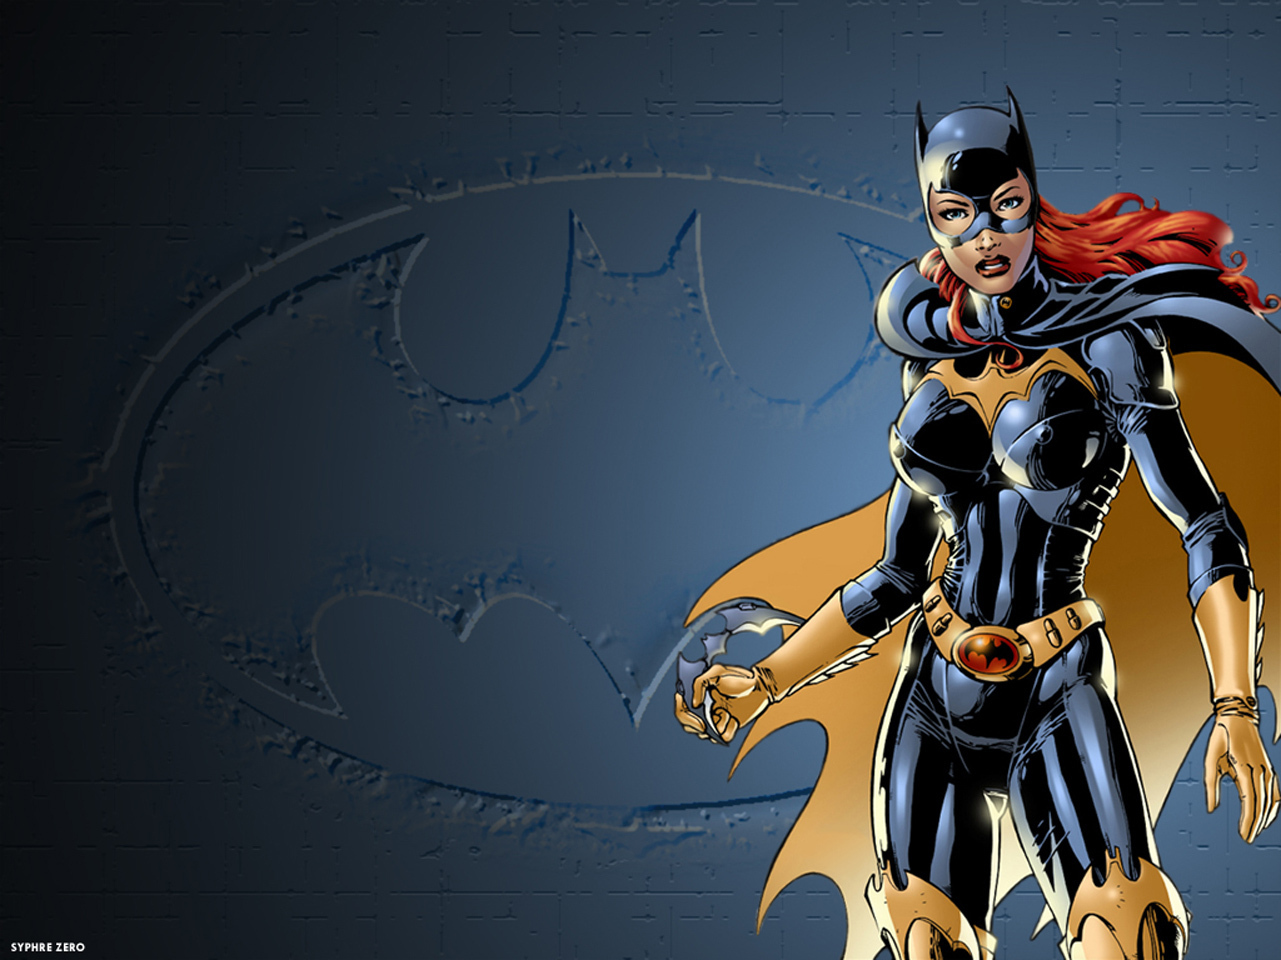 Free download DC Comics image Batgirl wallpaper photo 14197203 [1281x960] for your Desktop, Mobile & Tablet. Explore Batwoman Wallpaper. Batgirl Wallpaper from DC Comics, Bat Girl Wallpaper, Batgirl Wallpaper 1024x768